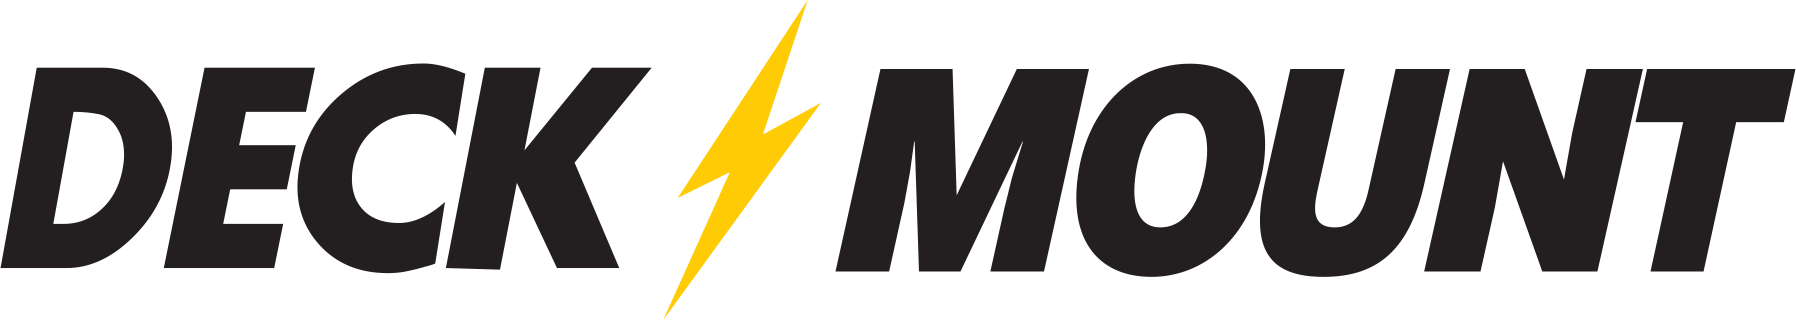 Deck Mount Logo